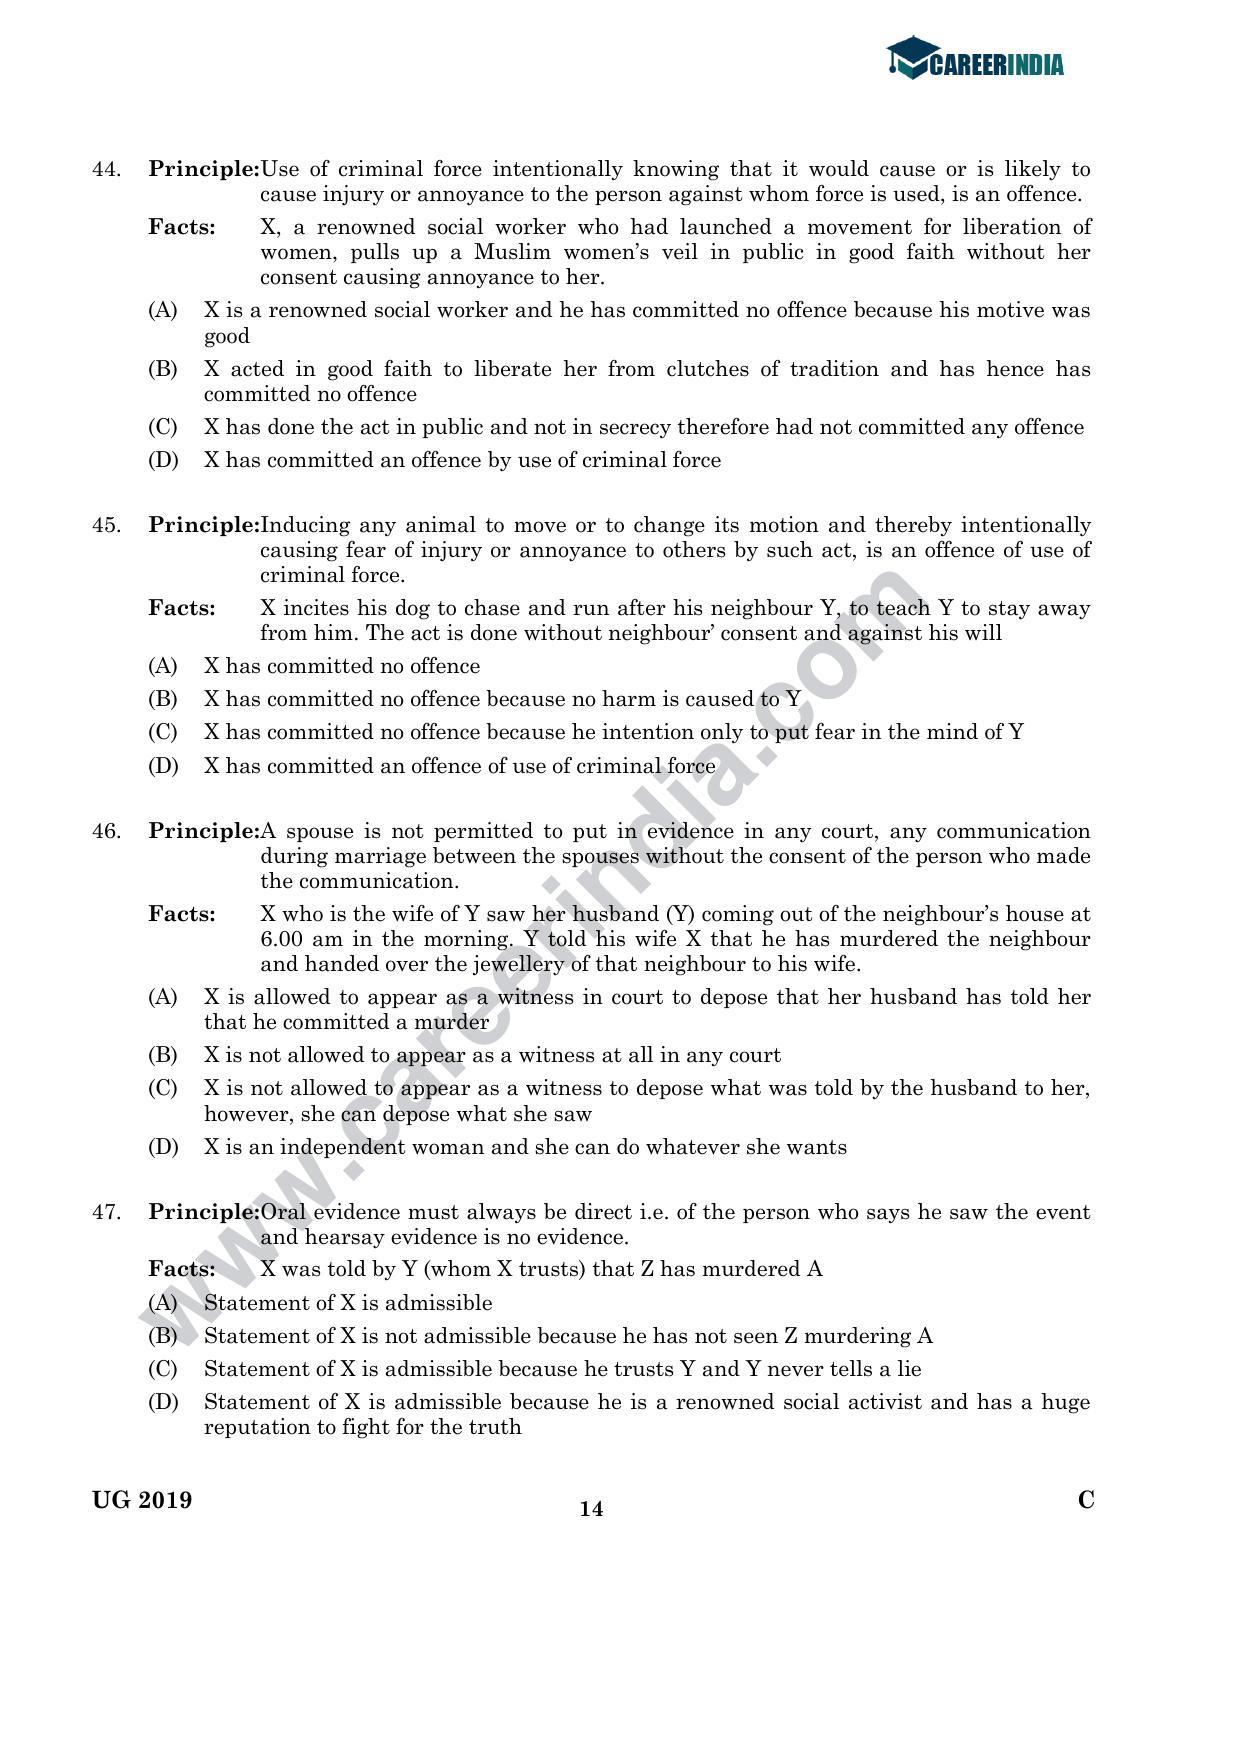 CLAT 2019 UG Legal-Aptitude Question Paper - Page 13